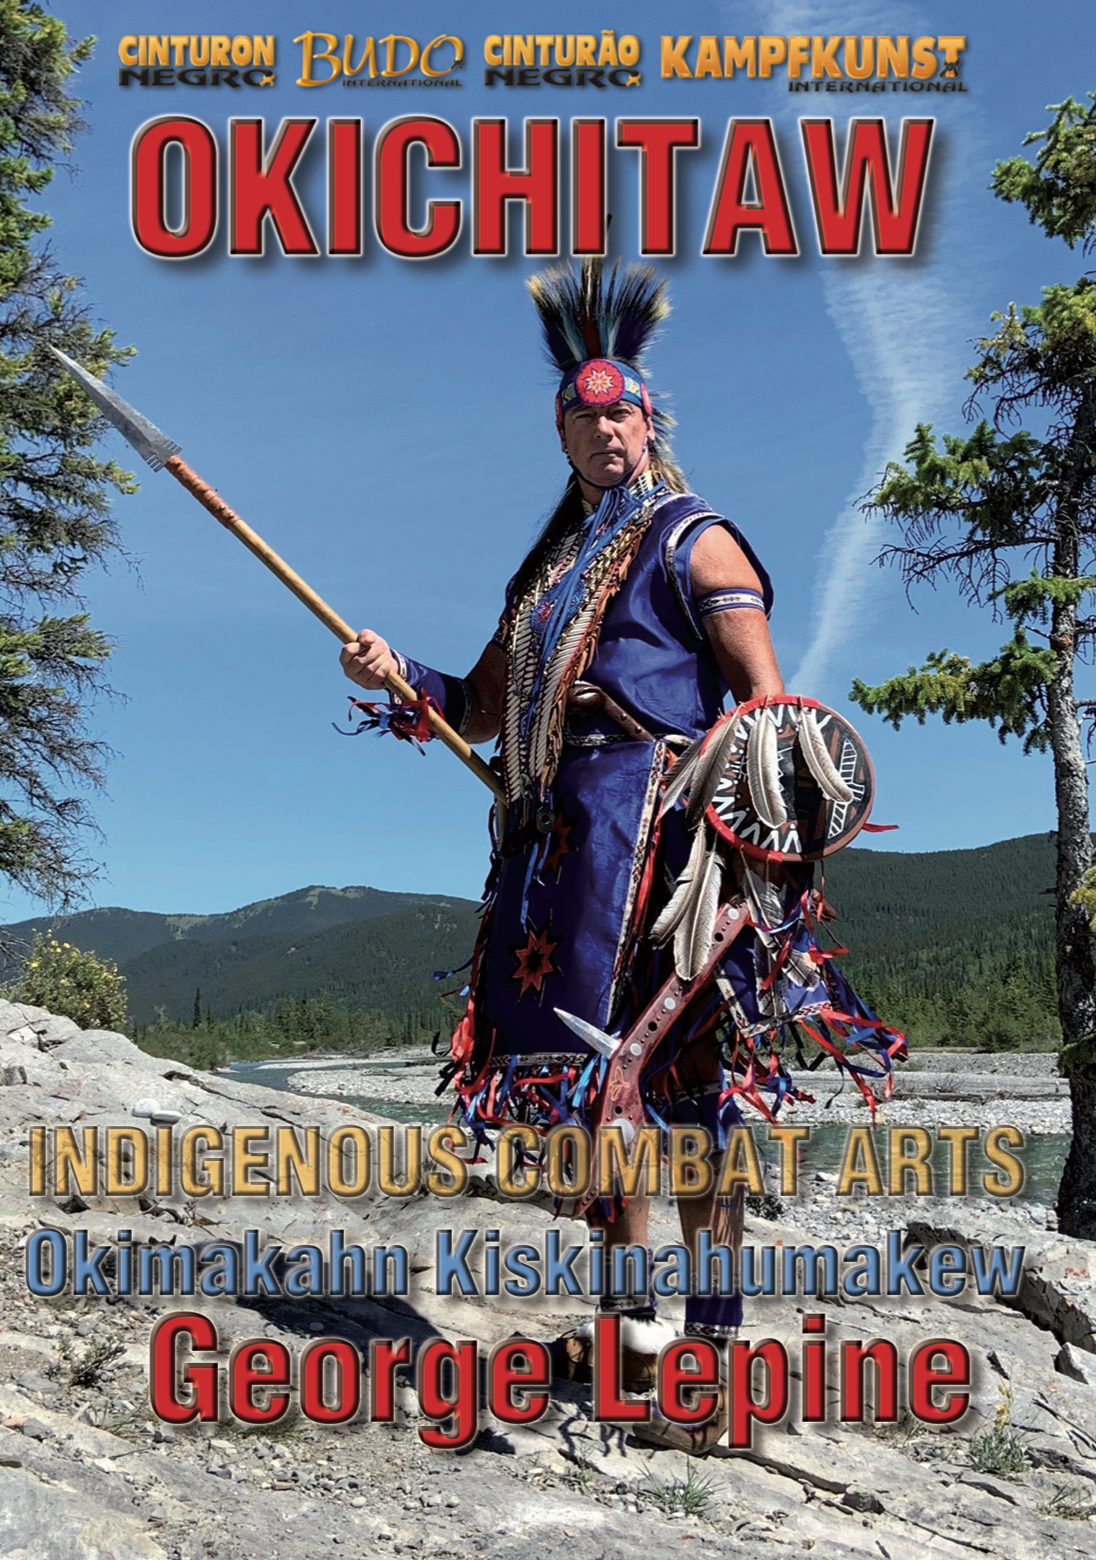 Okichitaw Indigenous Combat Art DVD by George Lepine - Budovideos